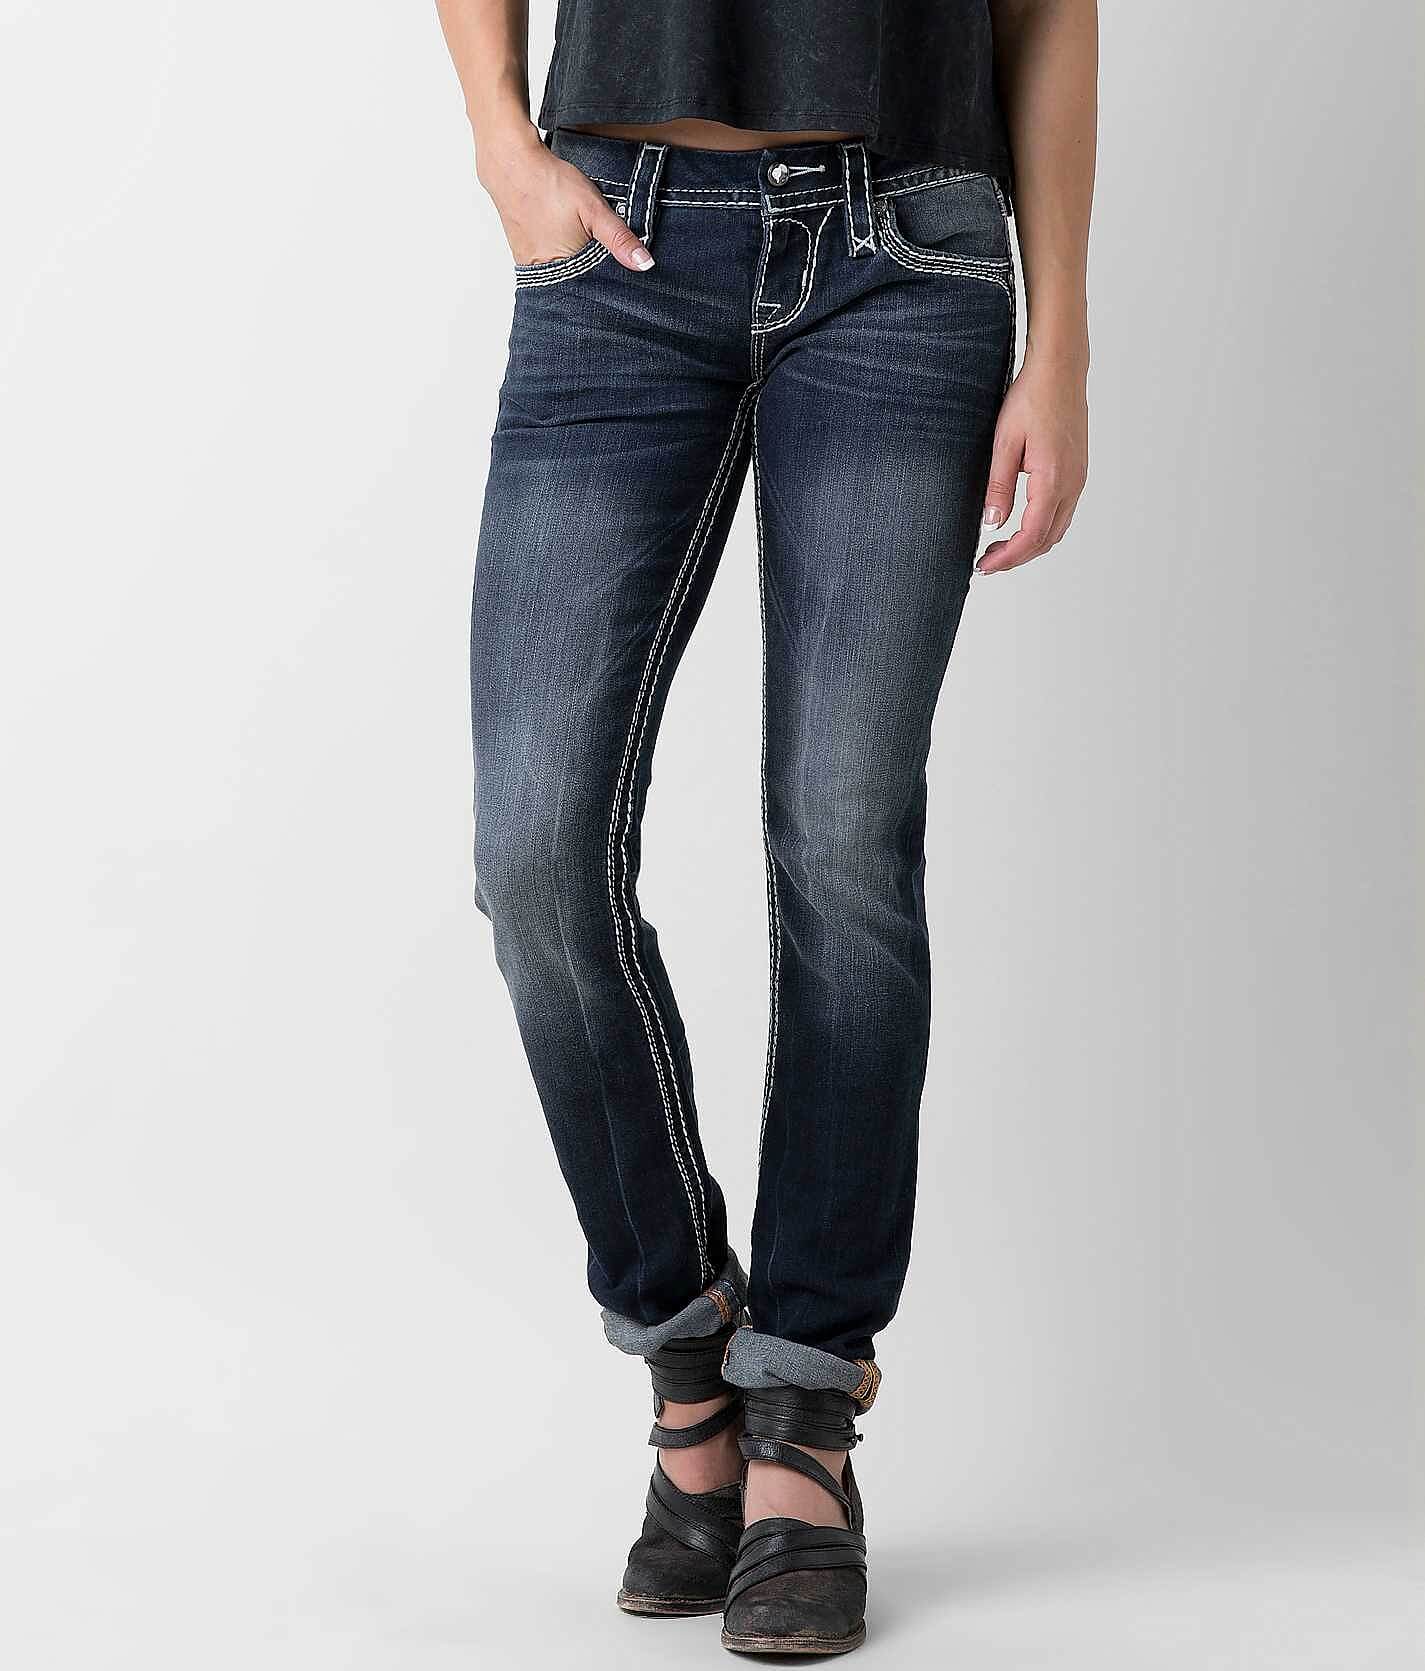 rock revival straight leg jeans womens